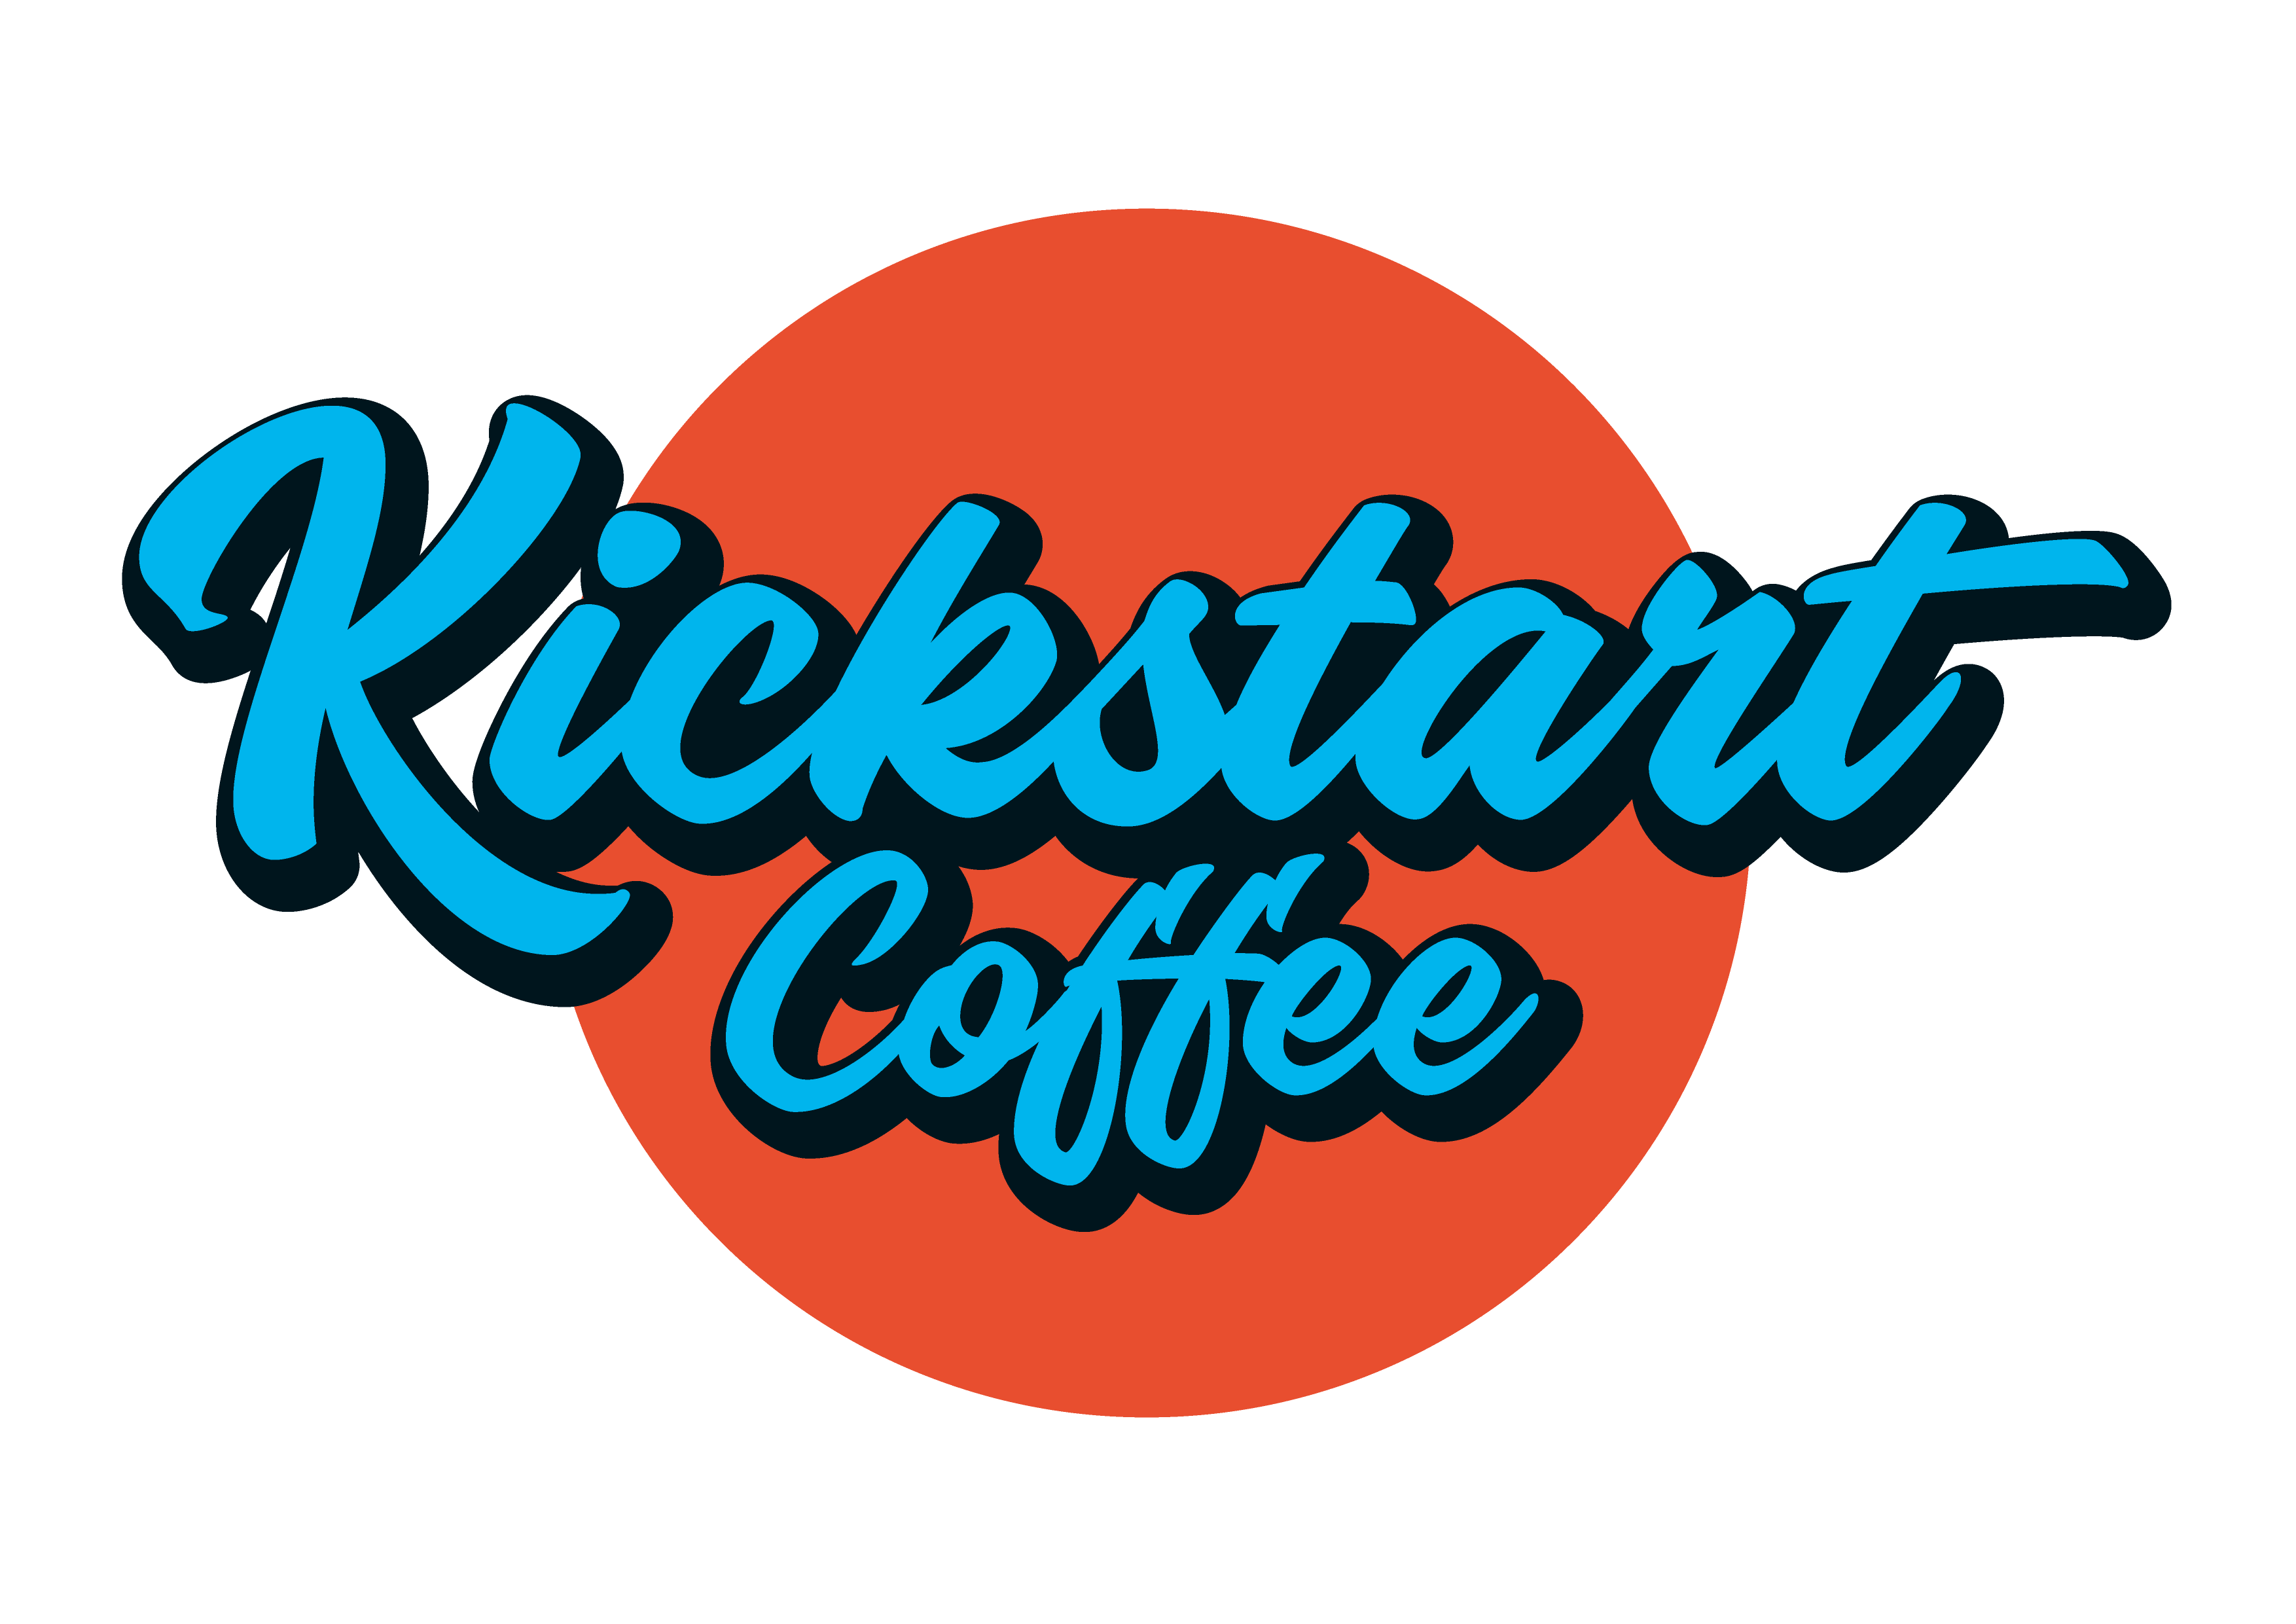 Kickstart coffee